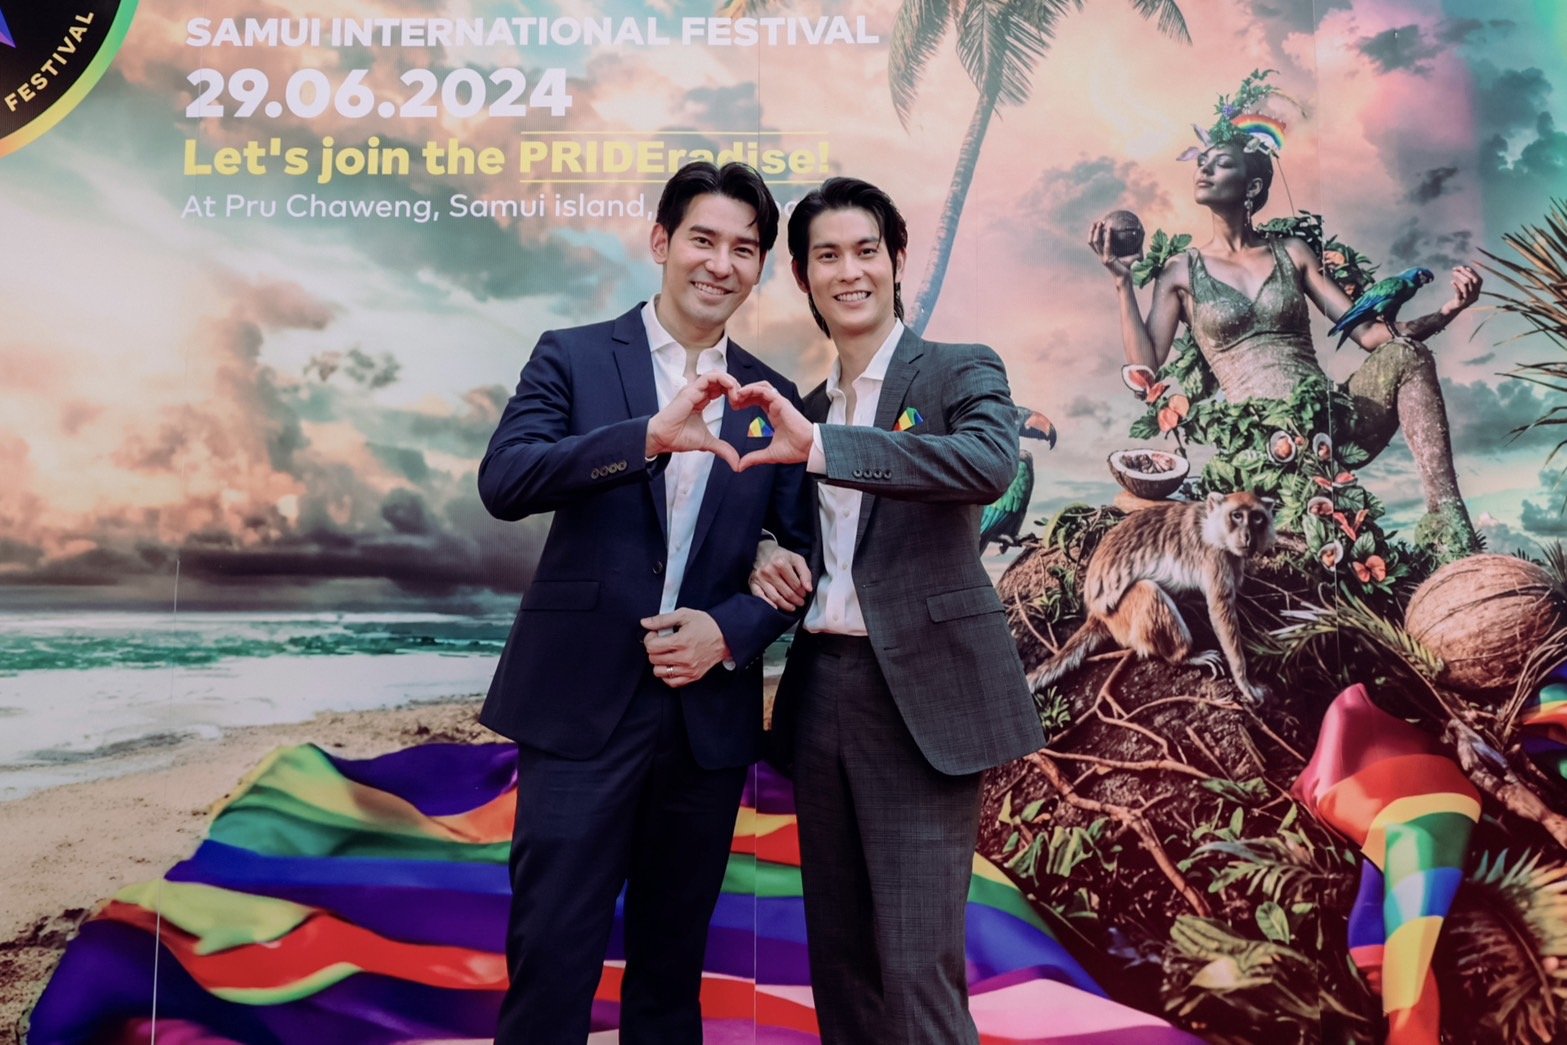 PRIDE NATION SAMUI จัดงานเสวนาส่งท้าย Pride Month ดึง “พอร์ช-อาร์ม” คู่รัก LGBTQIAN+ ถ่ายทอดมุมมองความรัก เตรียมแต่งงานคู่แรกของเอเชีย